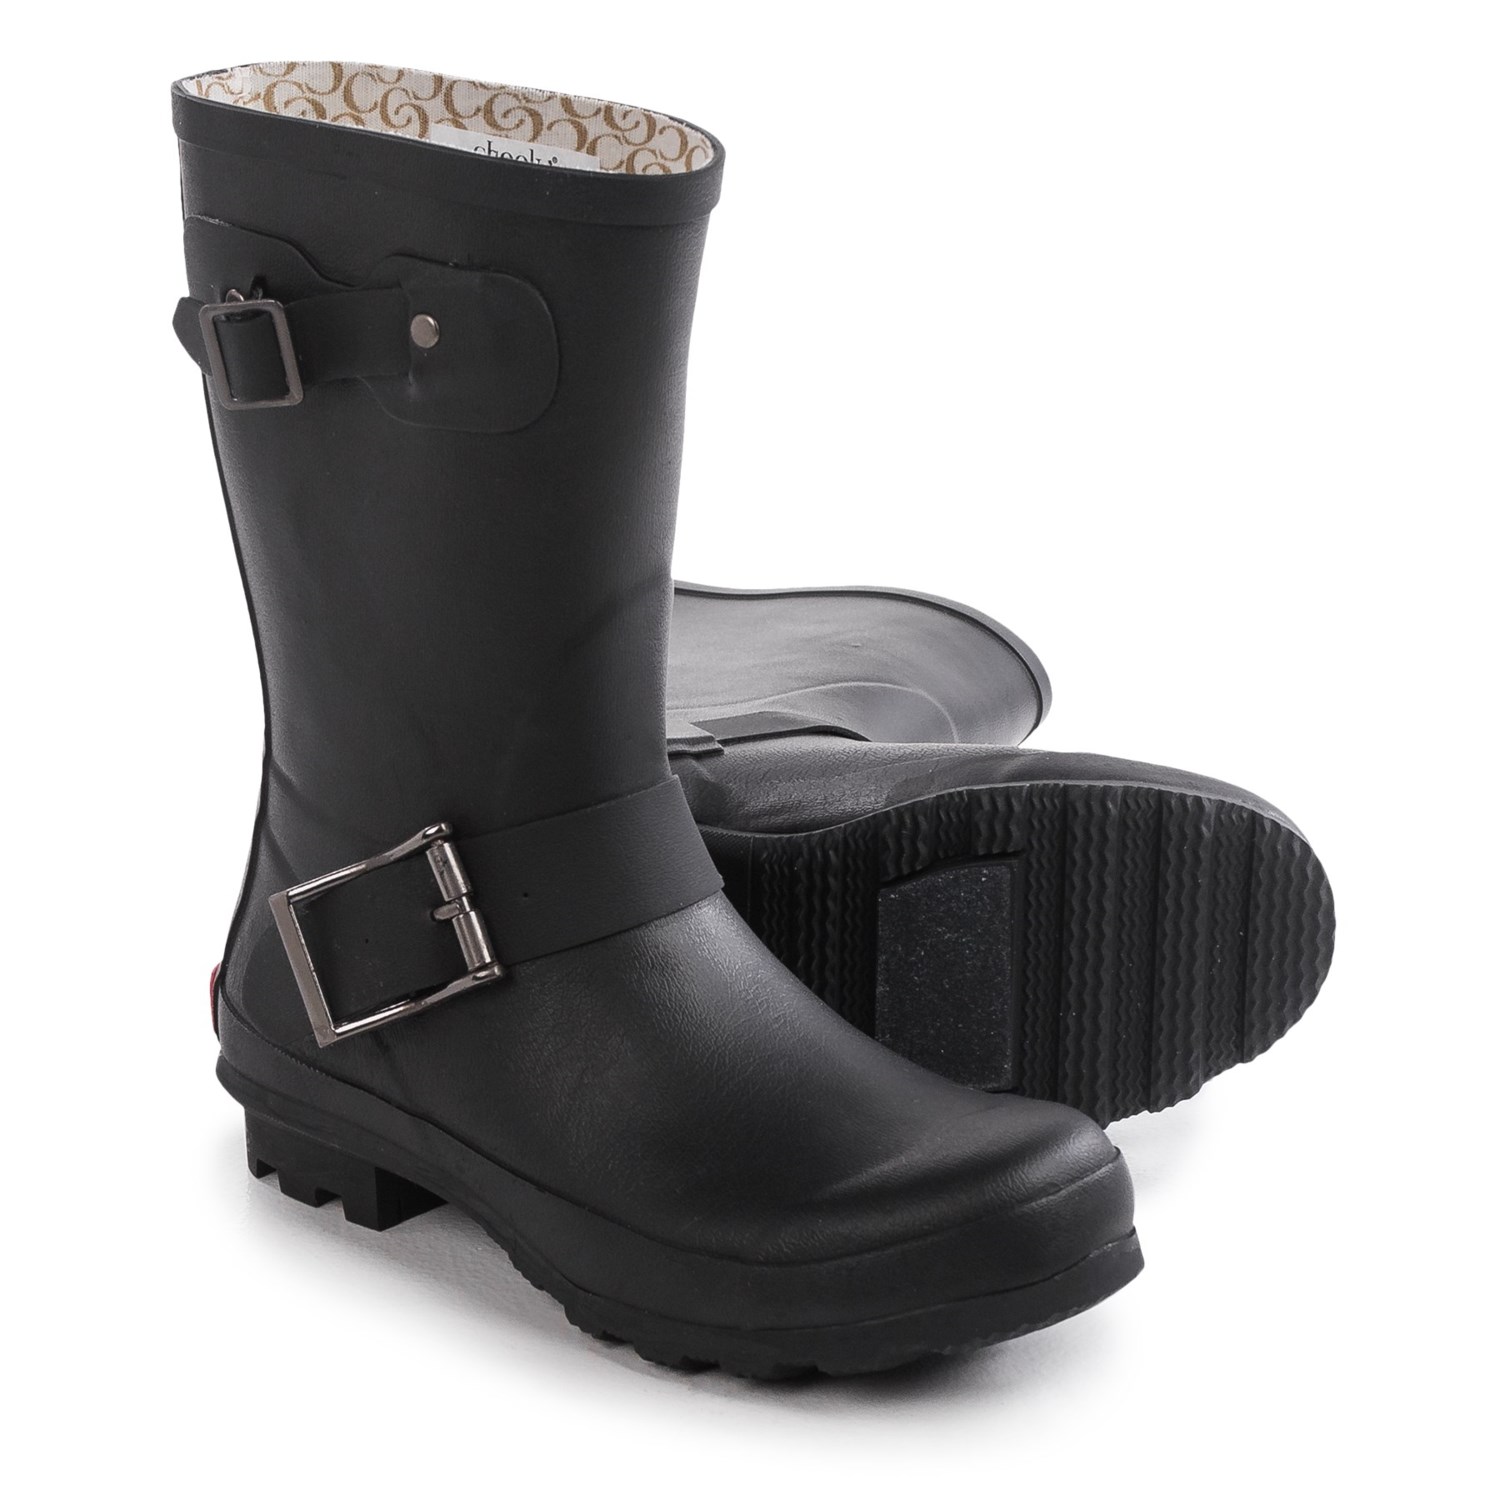 Chooka Classic Mid Cafe Racer Rain Boots – Waterproof (For Women)